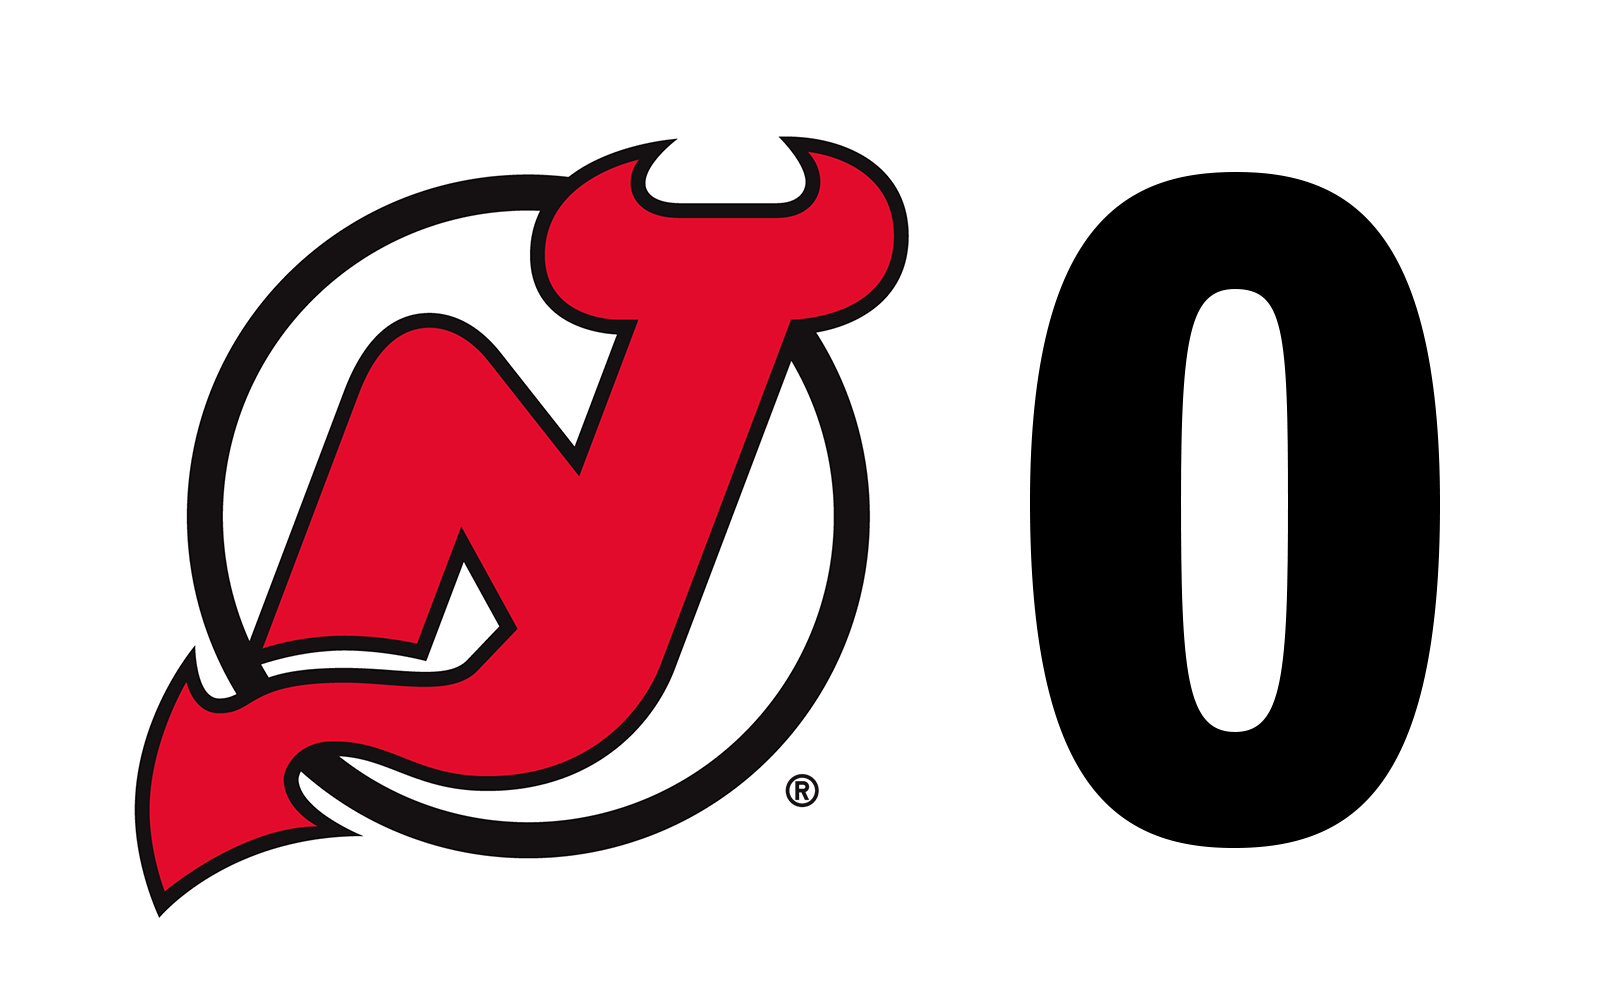 Official New Jersey Devils Website